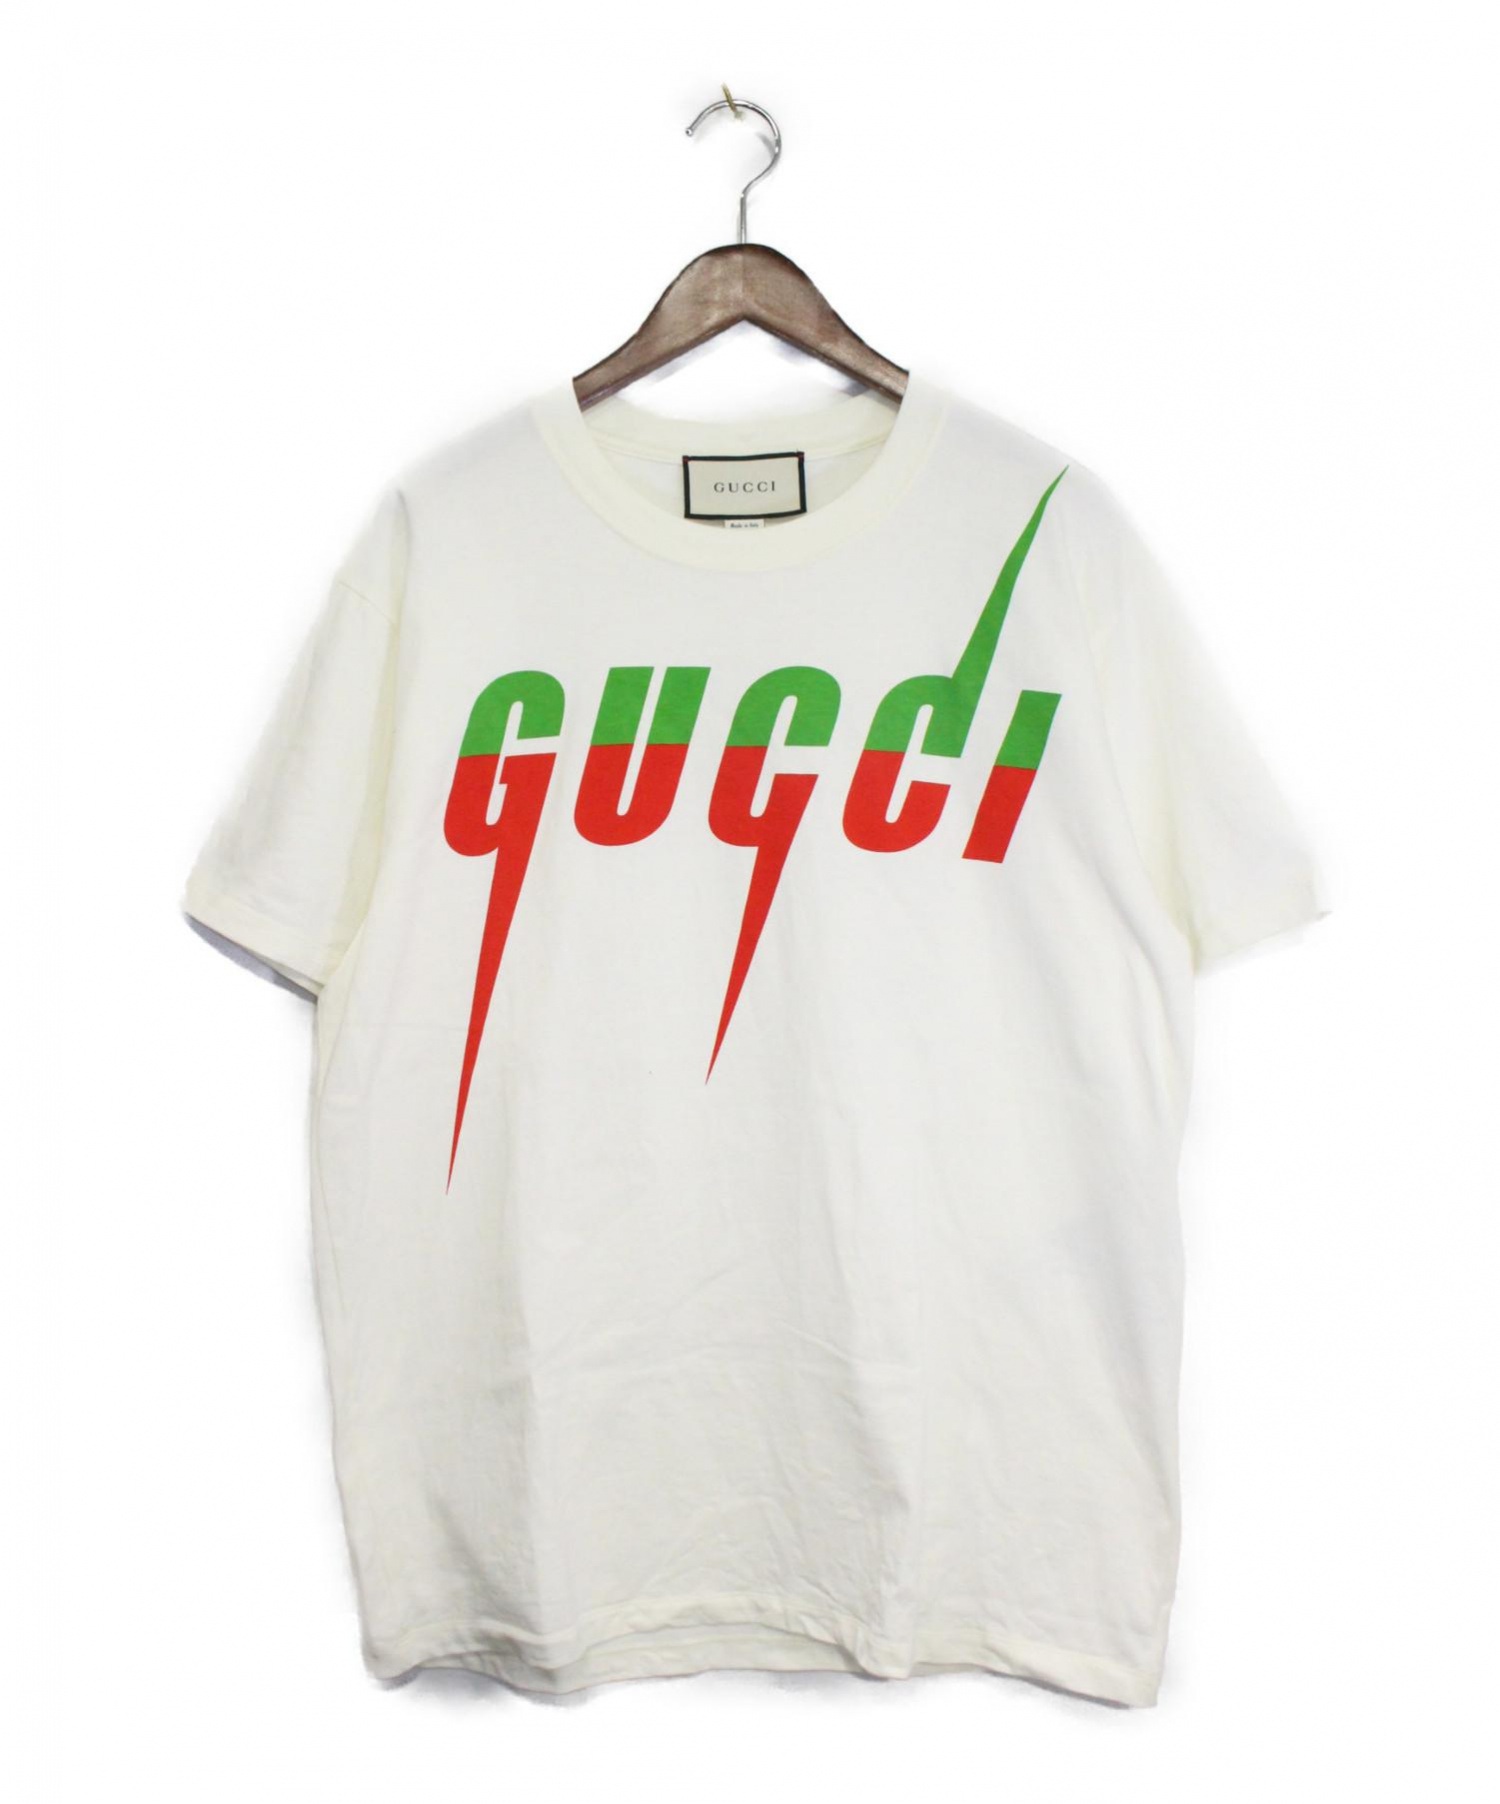 GUCCI (グッチ) グッチブレードロゴTシャツ サイズ:XS